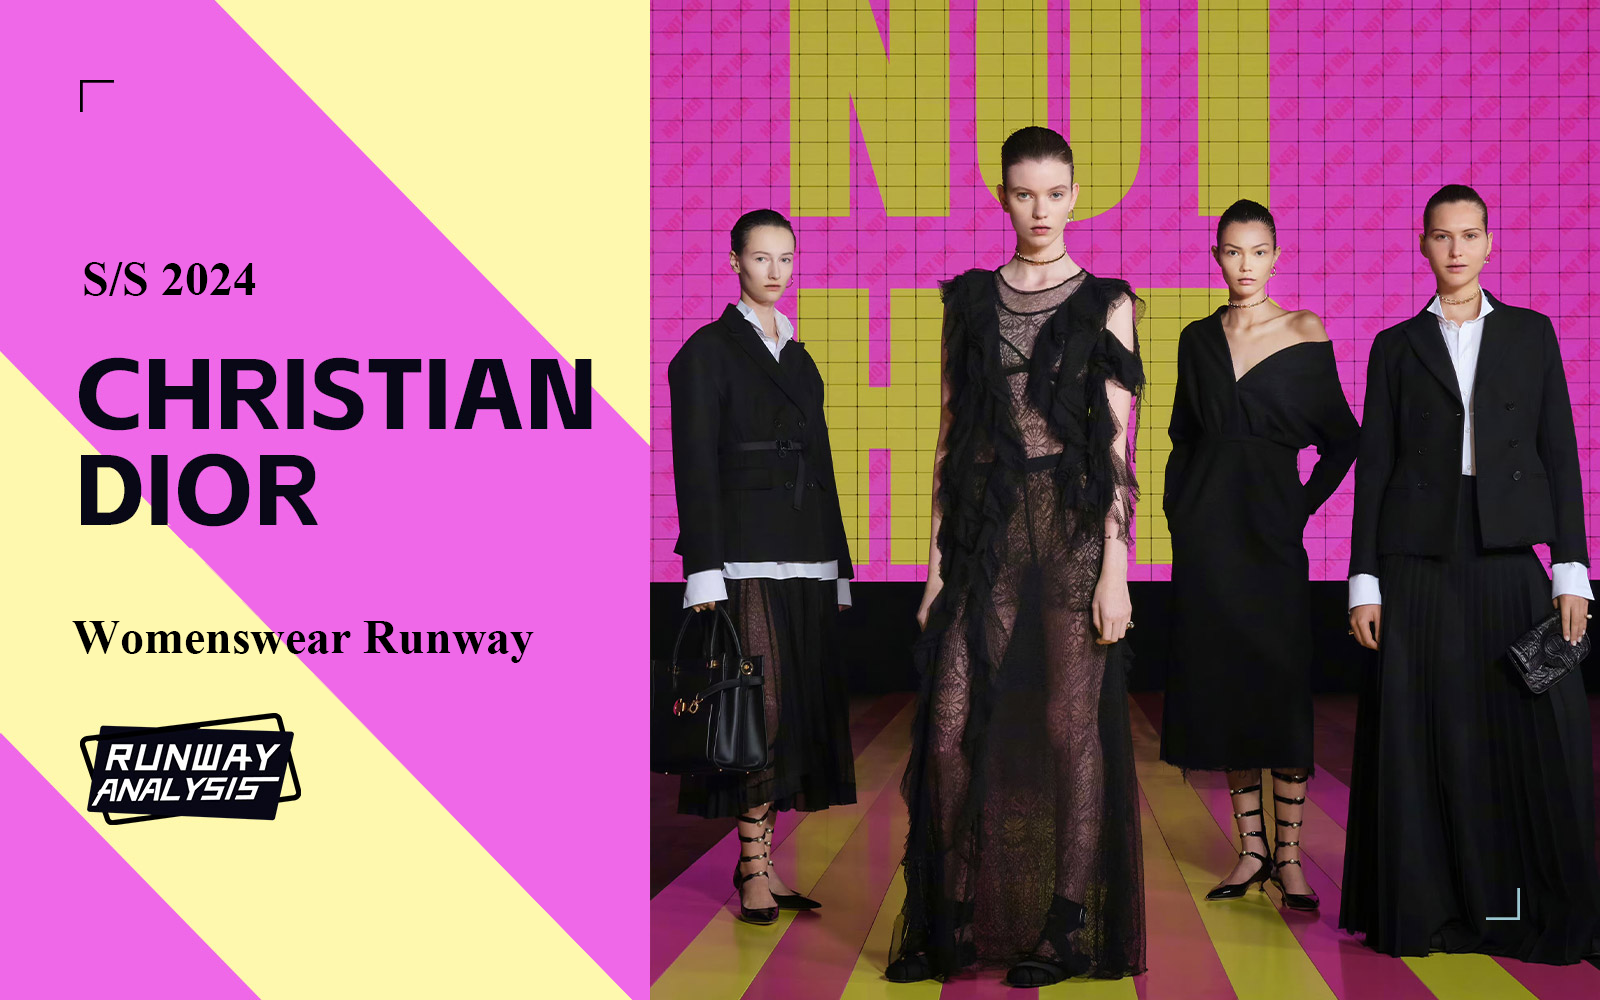 Fashion and Feminism -- The Womenswear Runway Analysis of Christian Dior